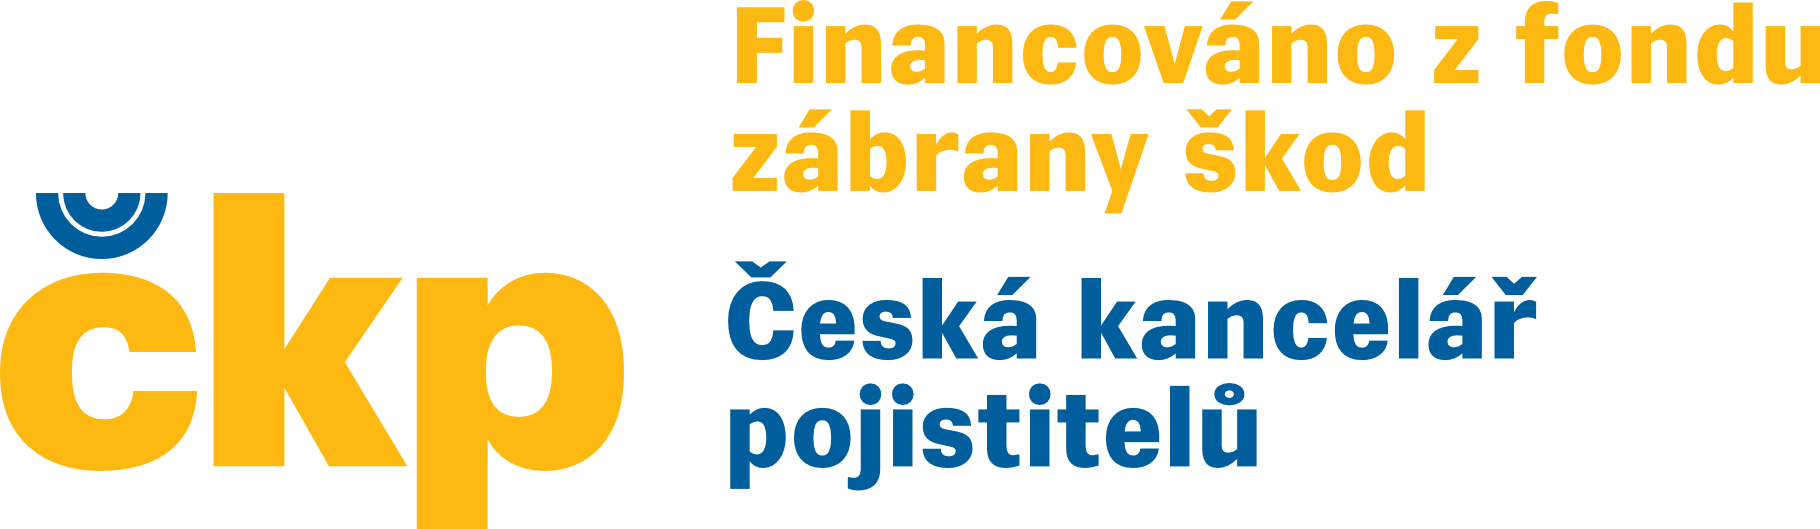 CKP_Financovani_Z_Fondu_Zabrany_Skod_barevne_4_radky.png